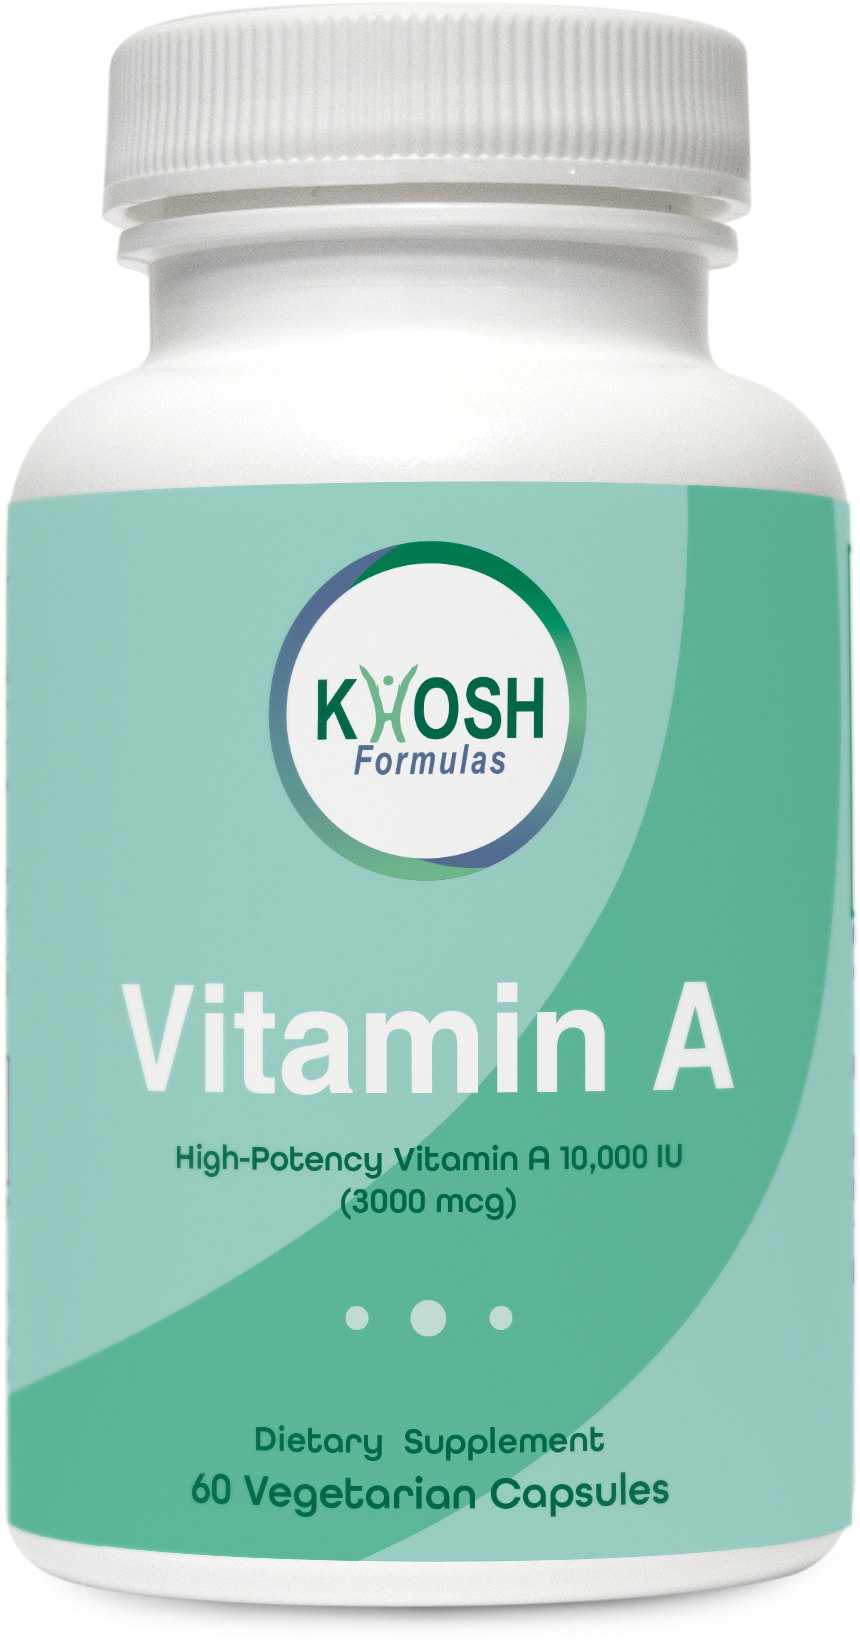 Vitamin A, KHOSH